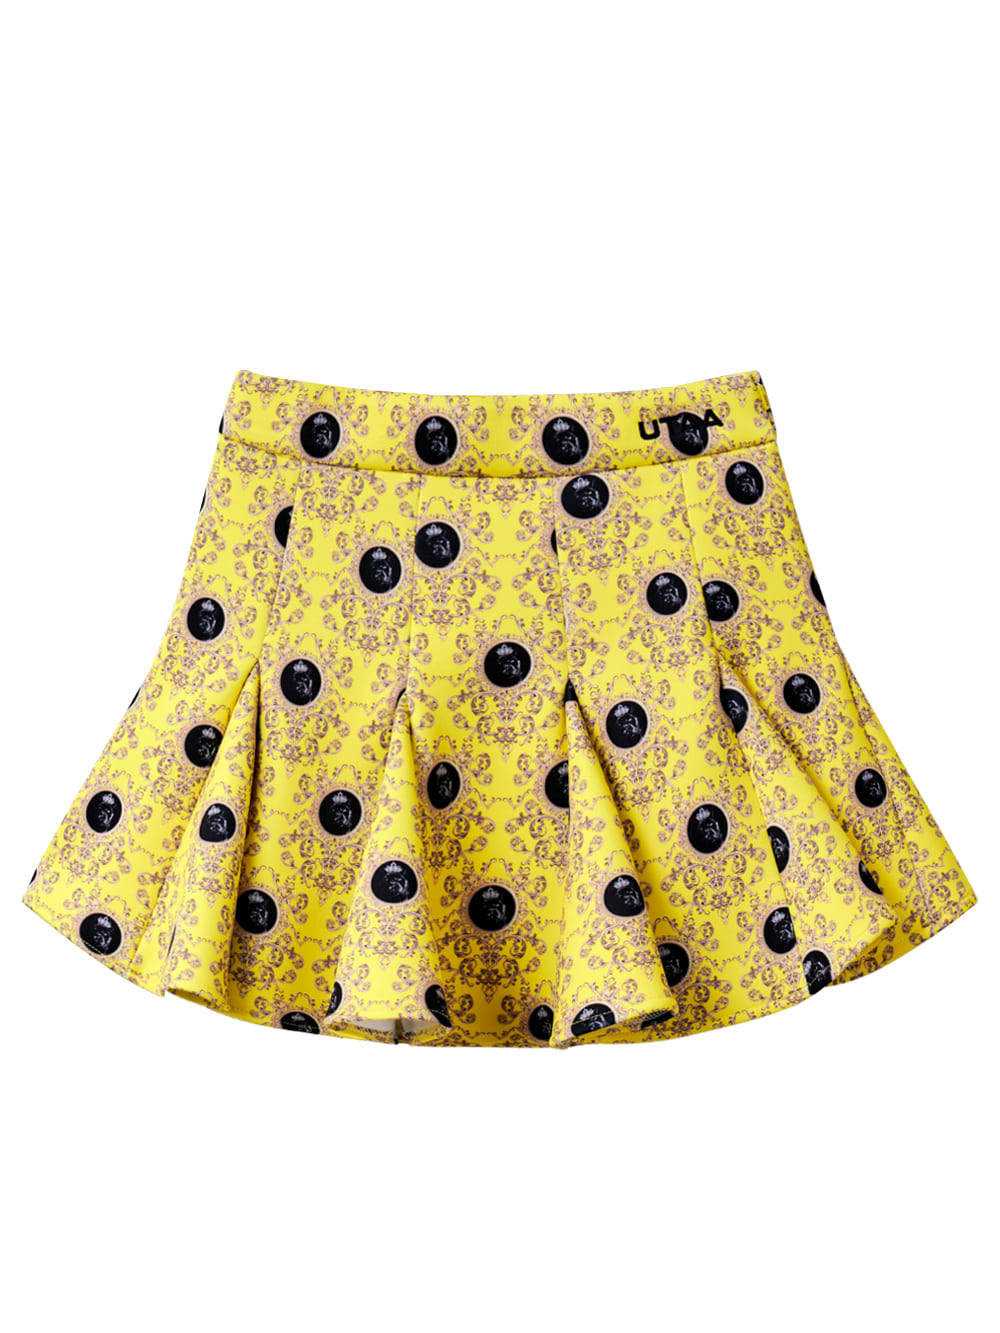 UTAA Dot Panther Neoprene Bloom Skirt : Yellow (UB2SKF273YE)